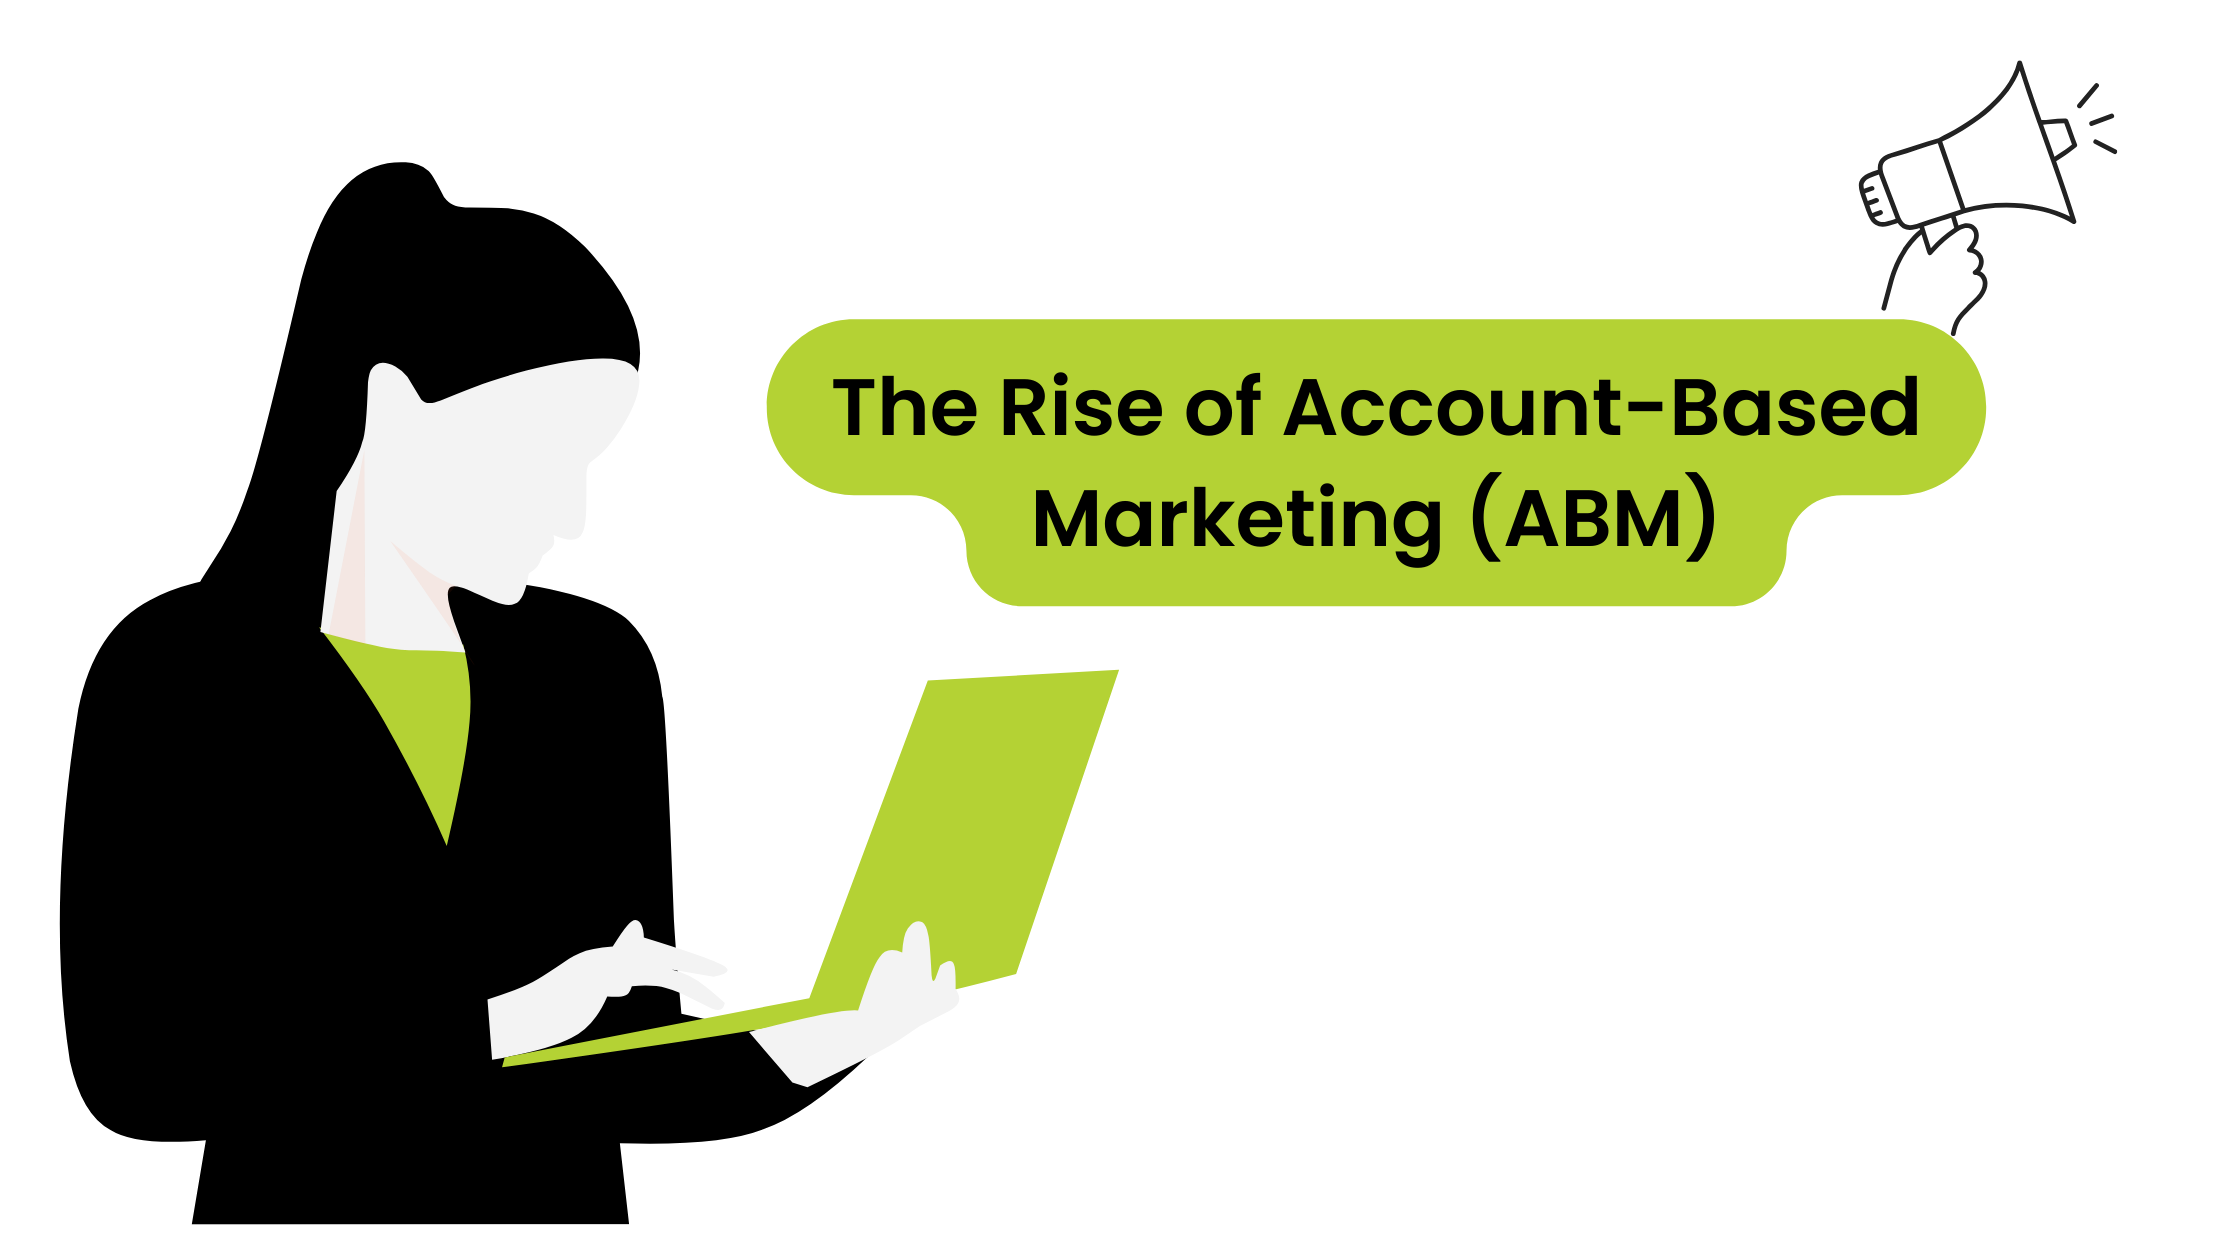 The Rise of Account-Based Marketing (ABM)